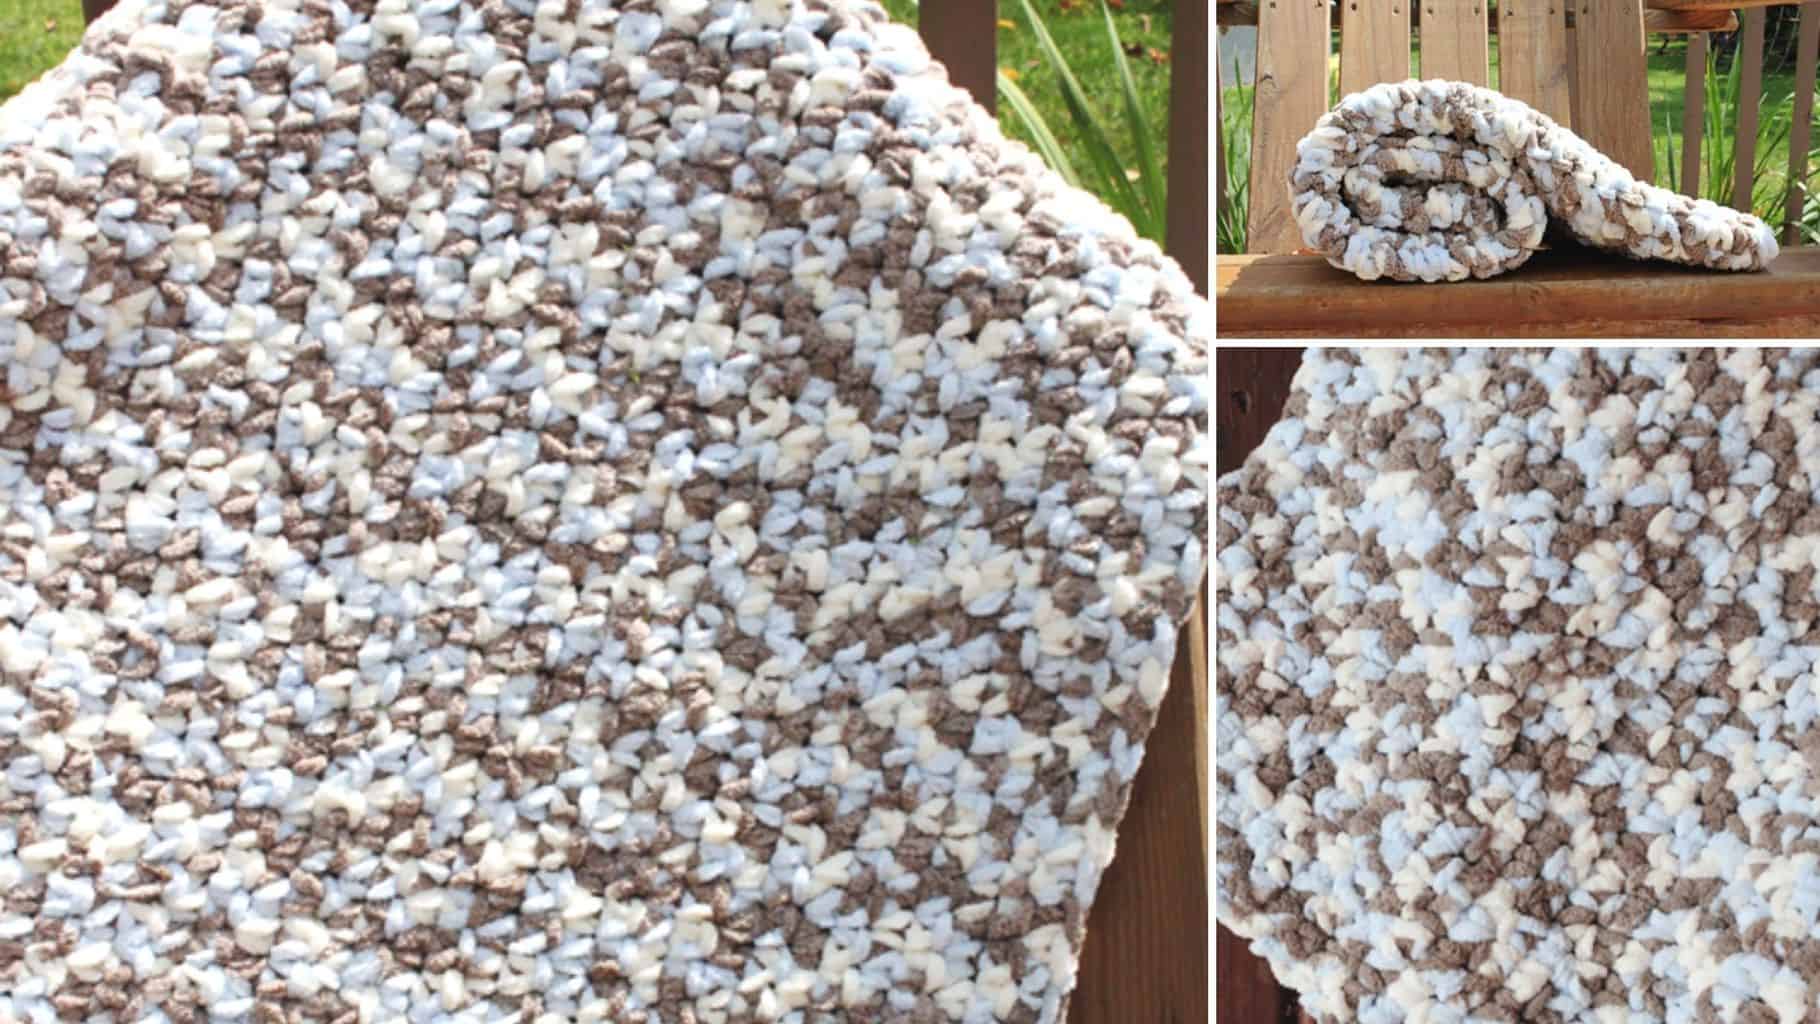 Bernat Puffy Crochet Baby Blanket